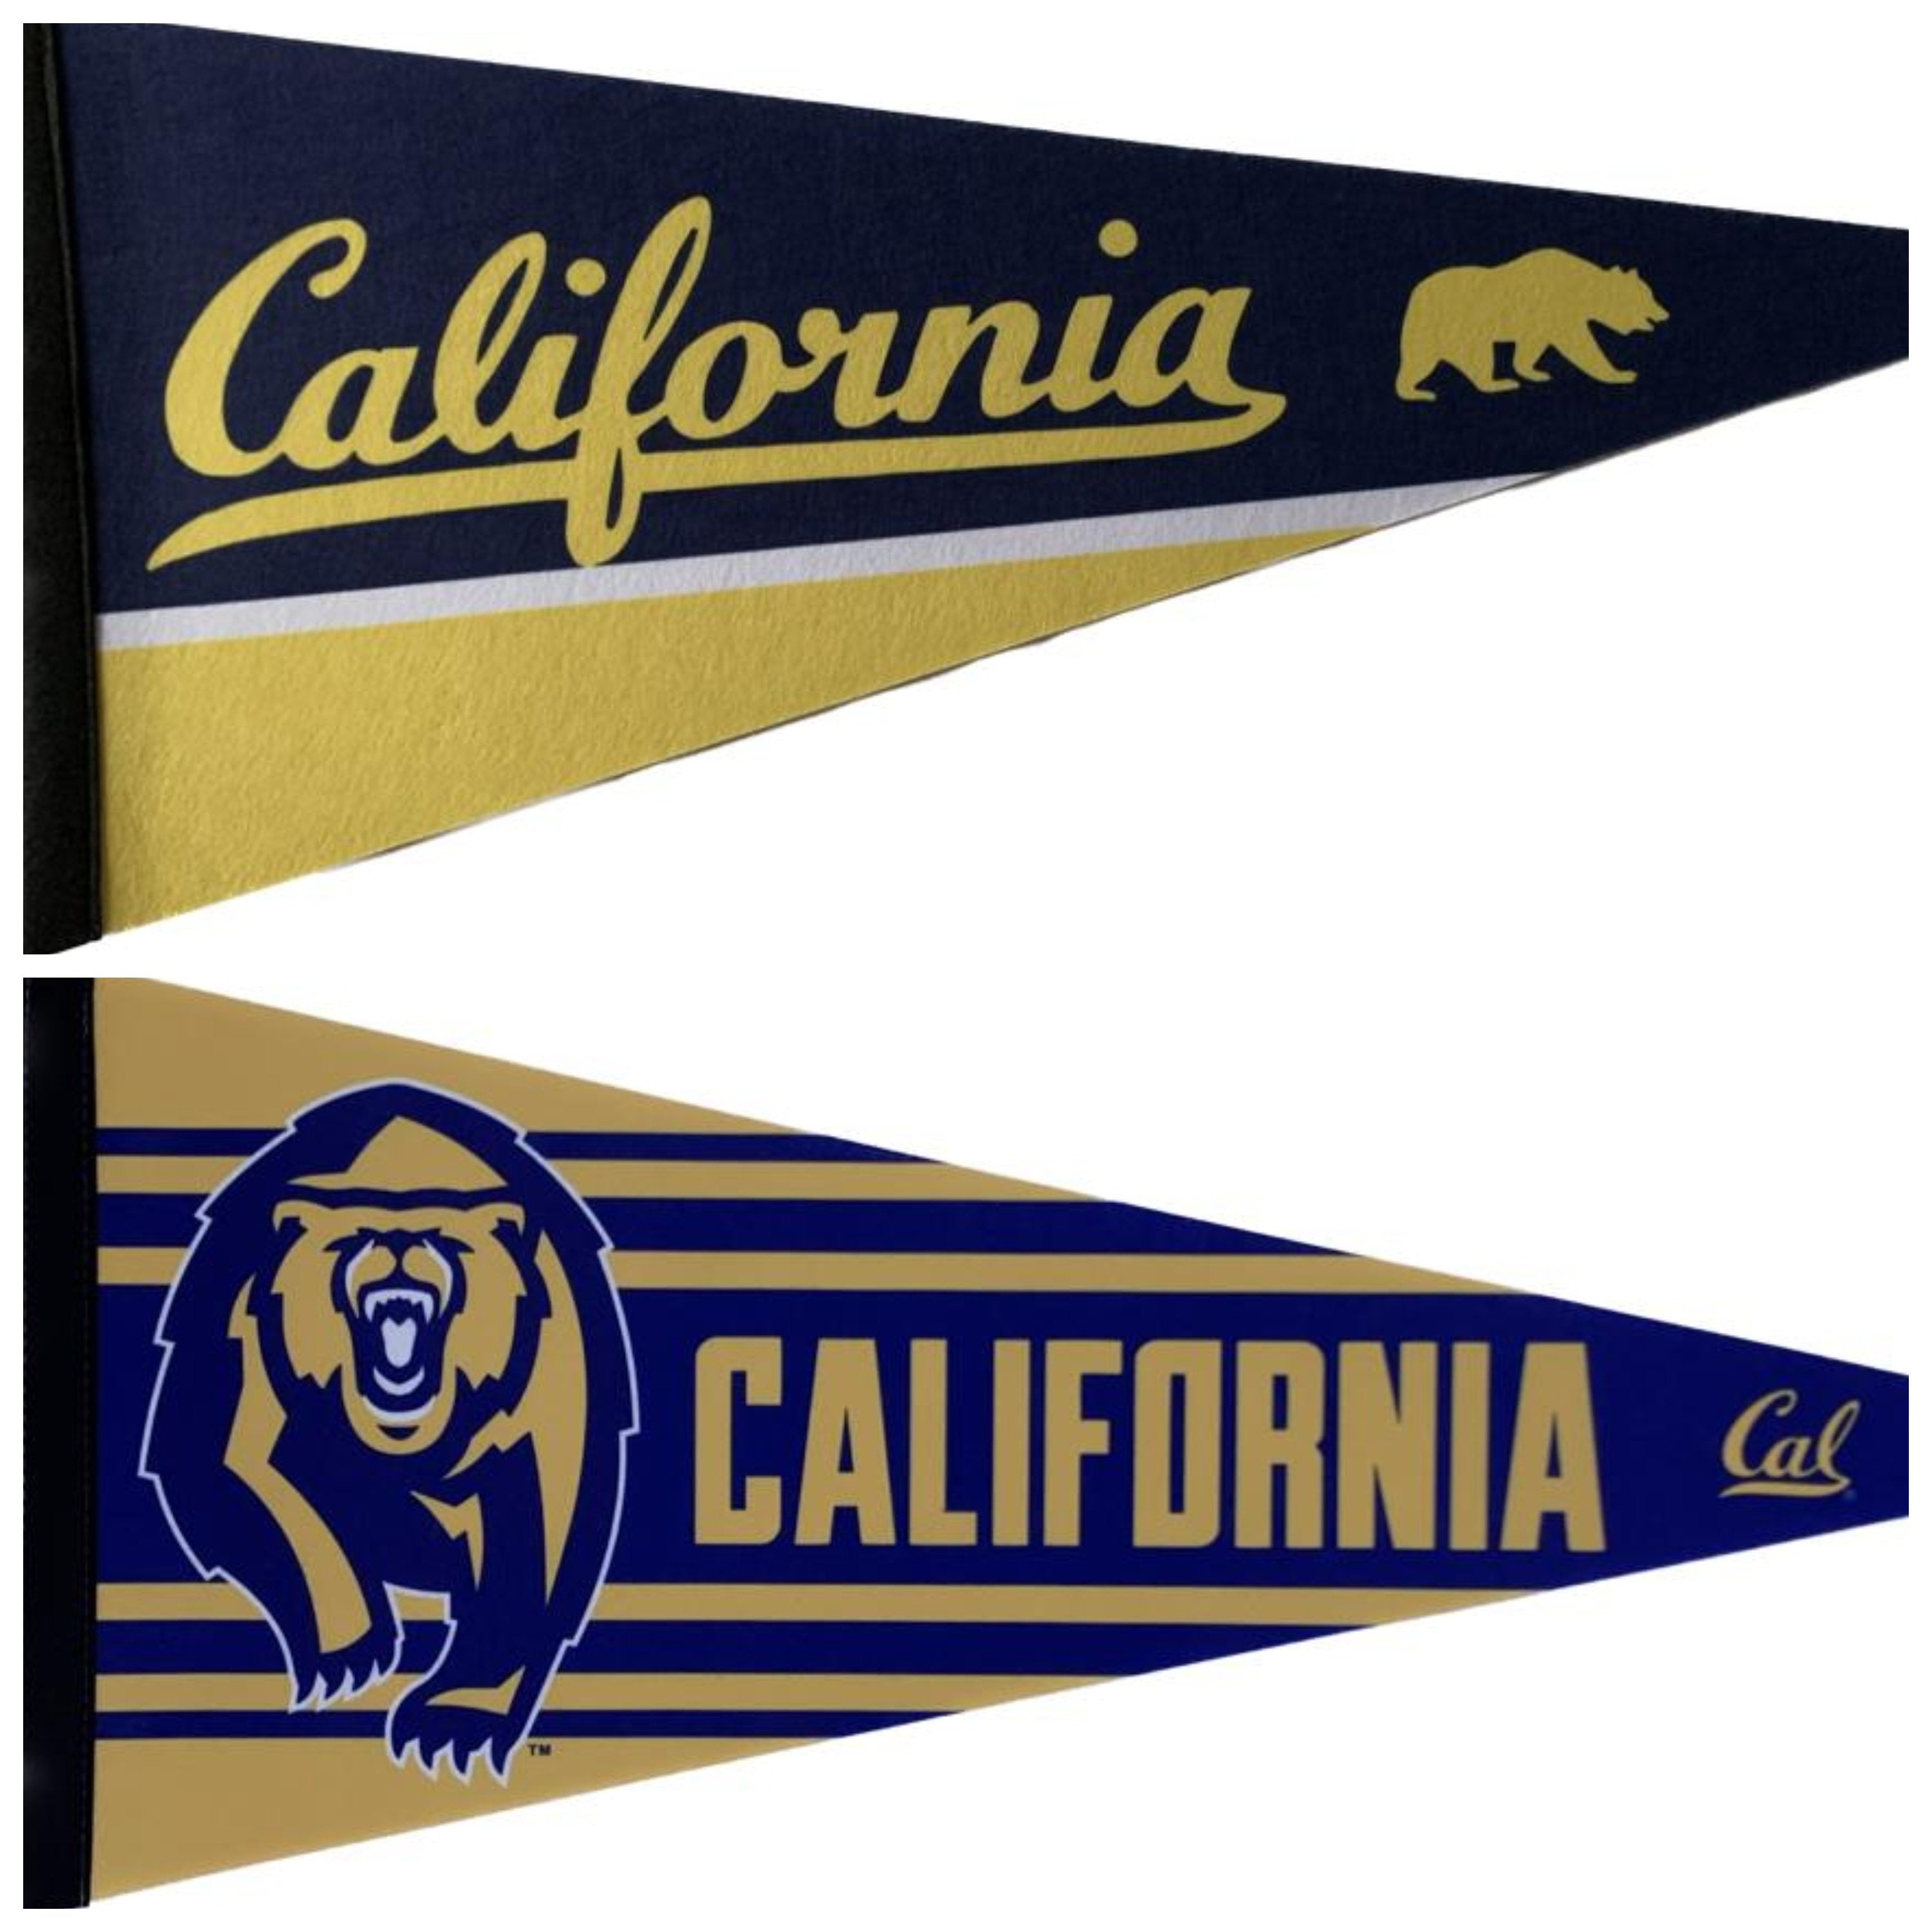 California University uni NCAA american football pennants vaantje vlaggetje vlag fanion pennant flag fahne drapeau university cali bears CA - original